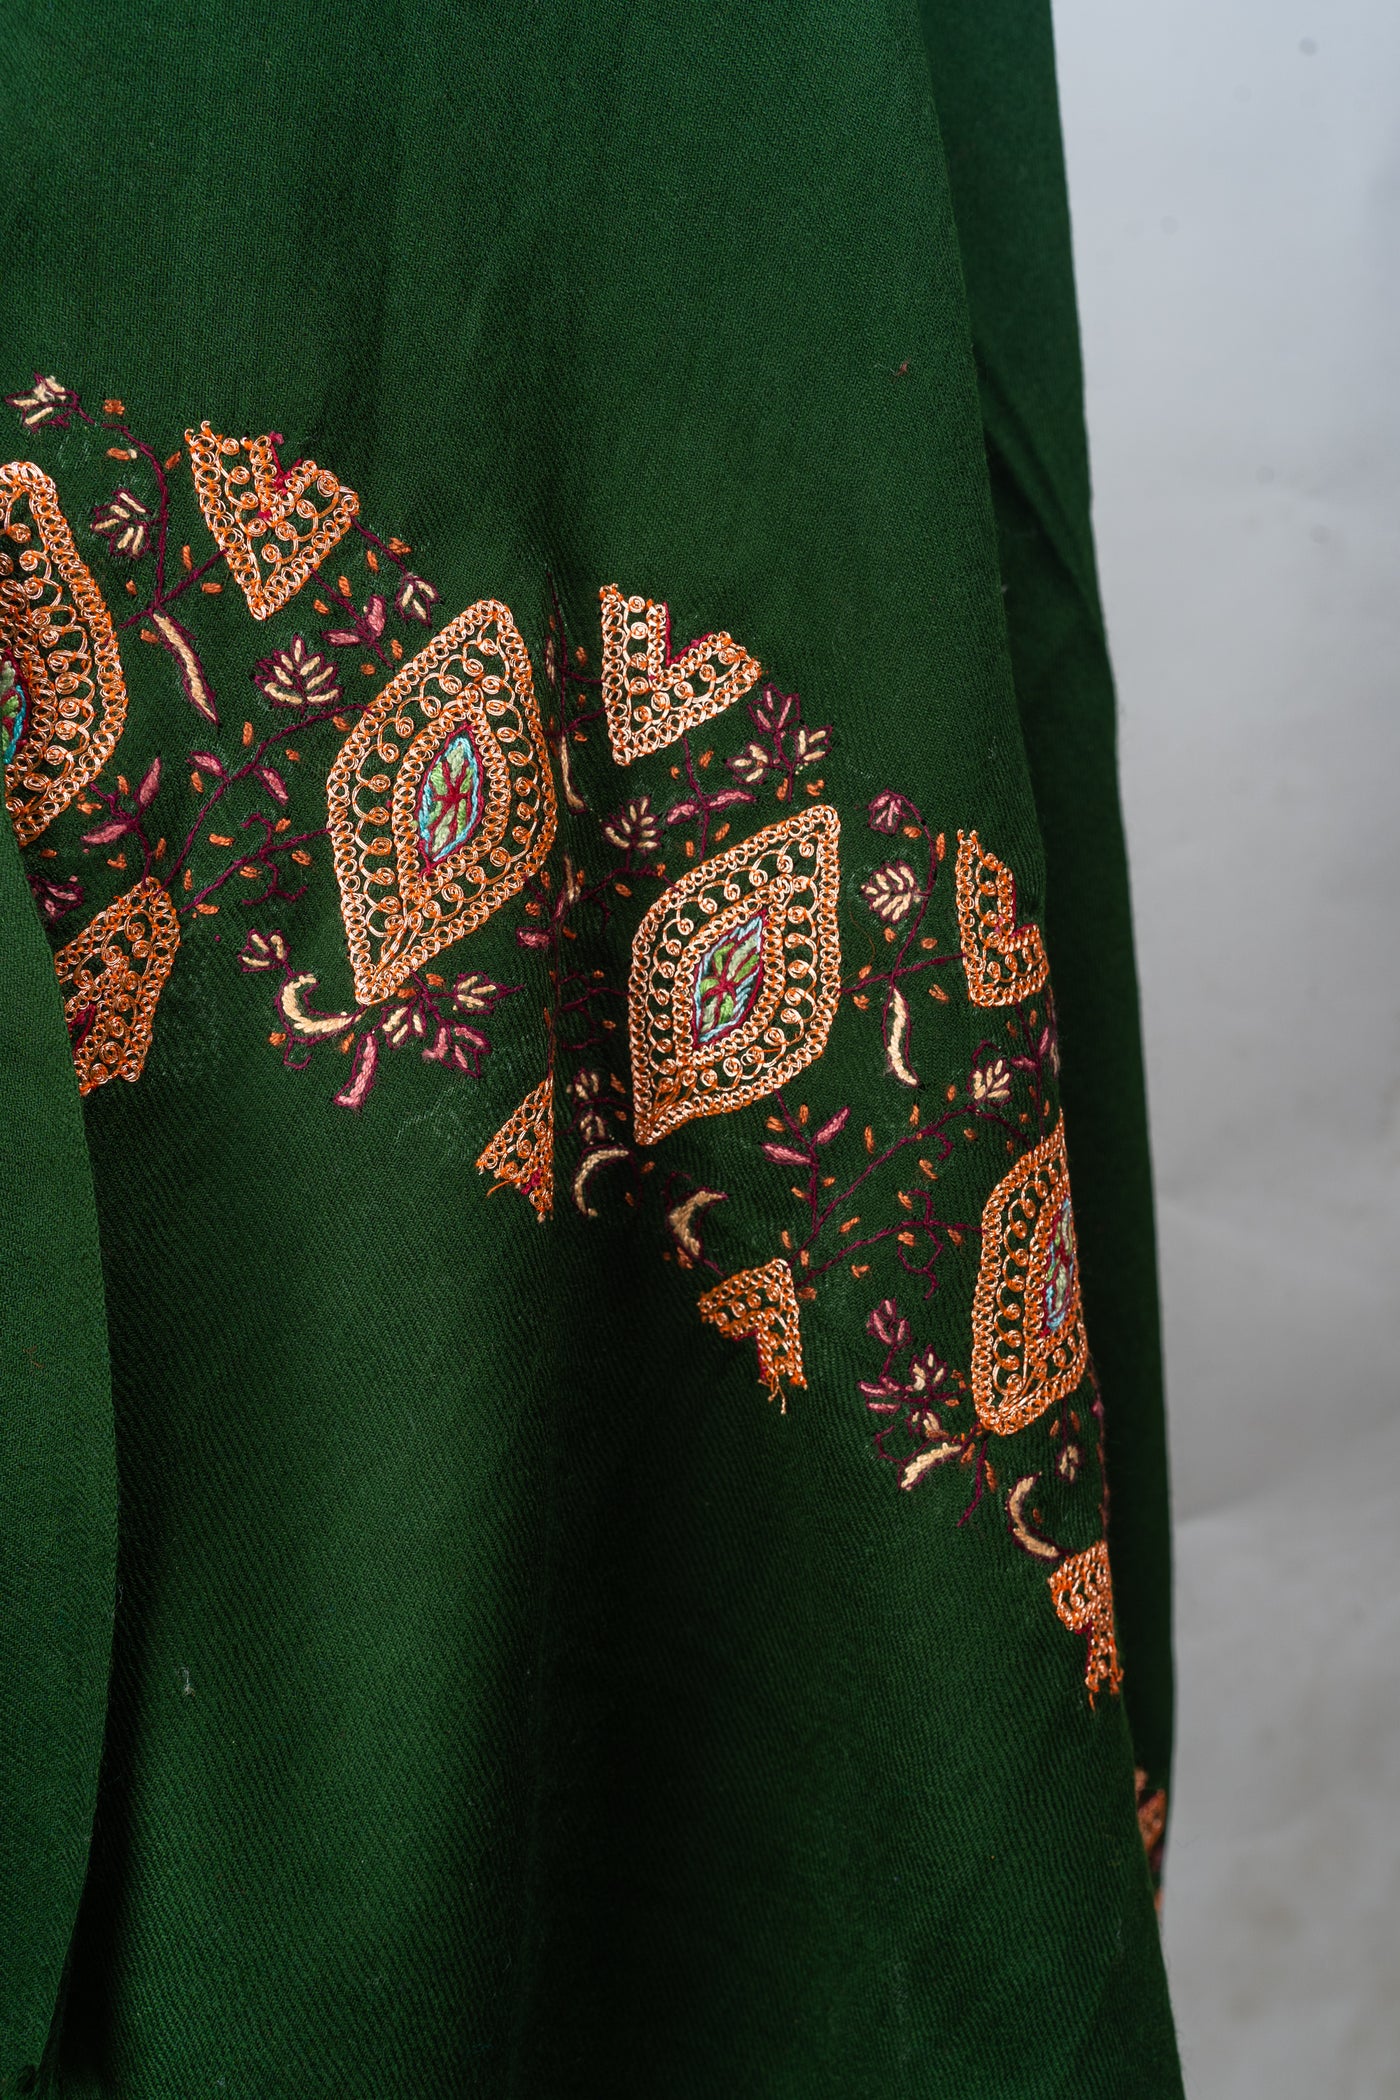 Sabzahar-e-Sozni: Kashmiri Hand Embroidered Emerald Suit with Sozni and Tilla Embroidery